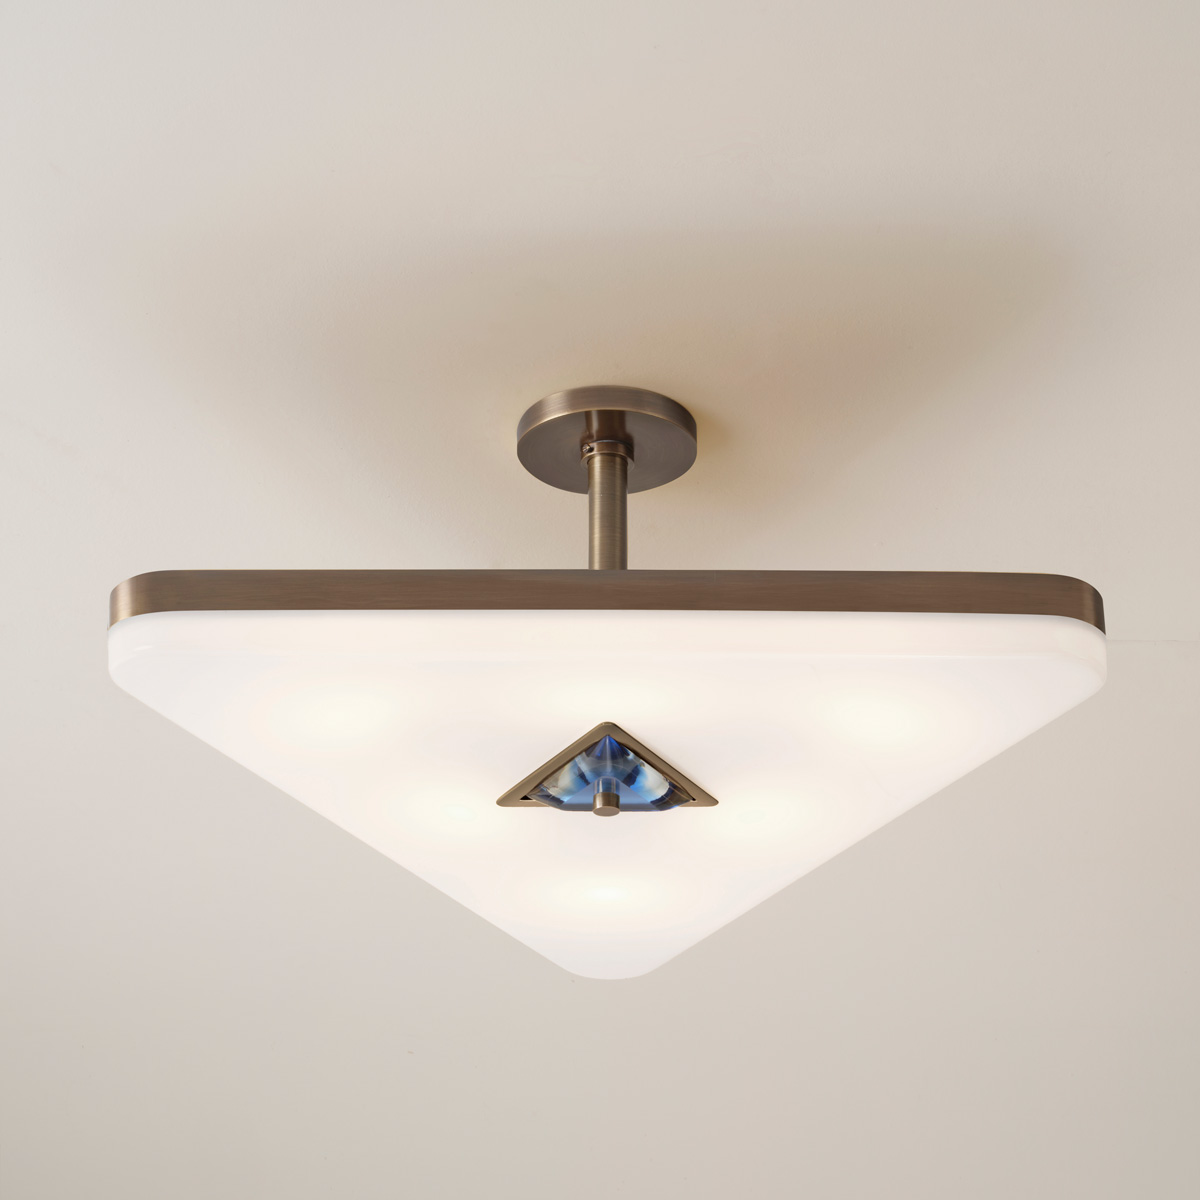 iris triangle ceiling light by gaspare asaro